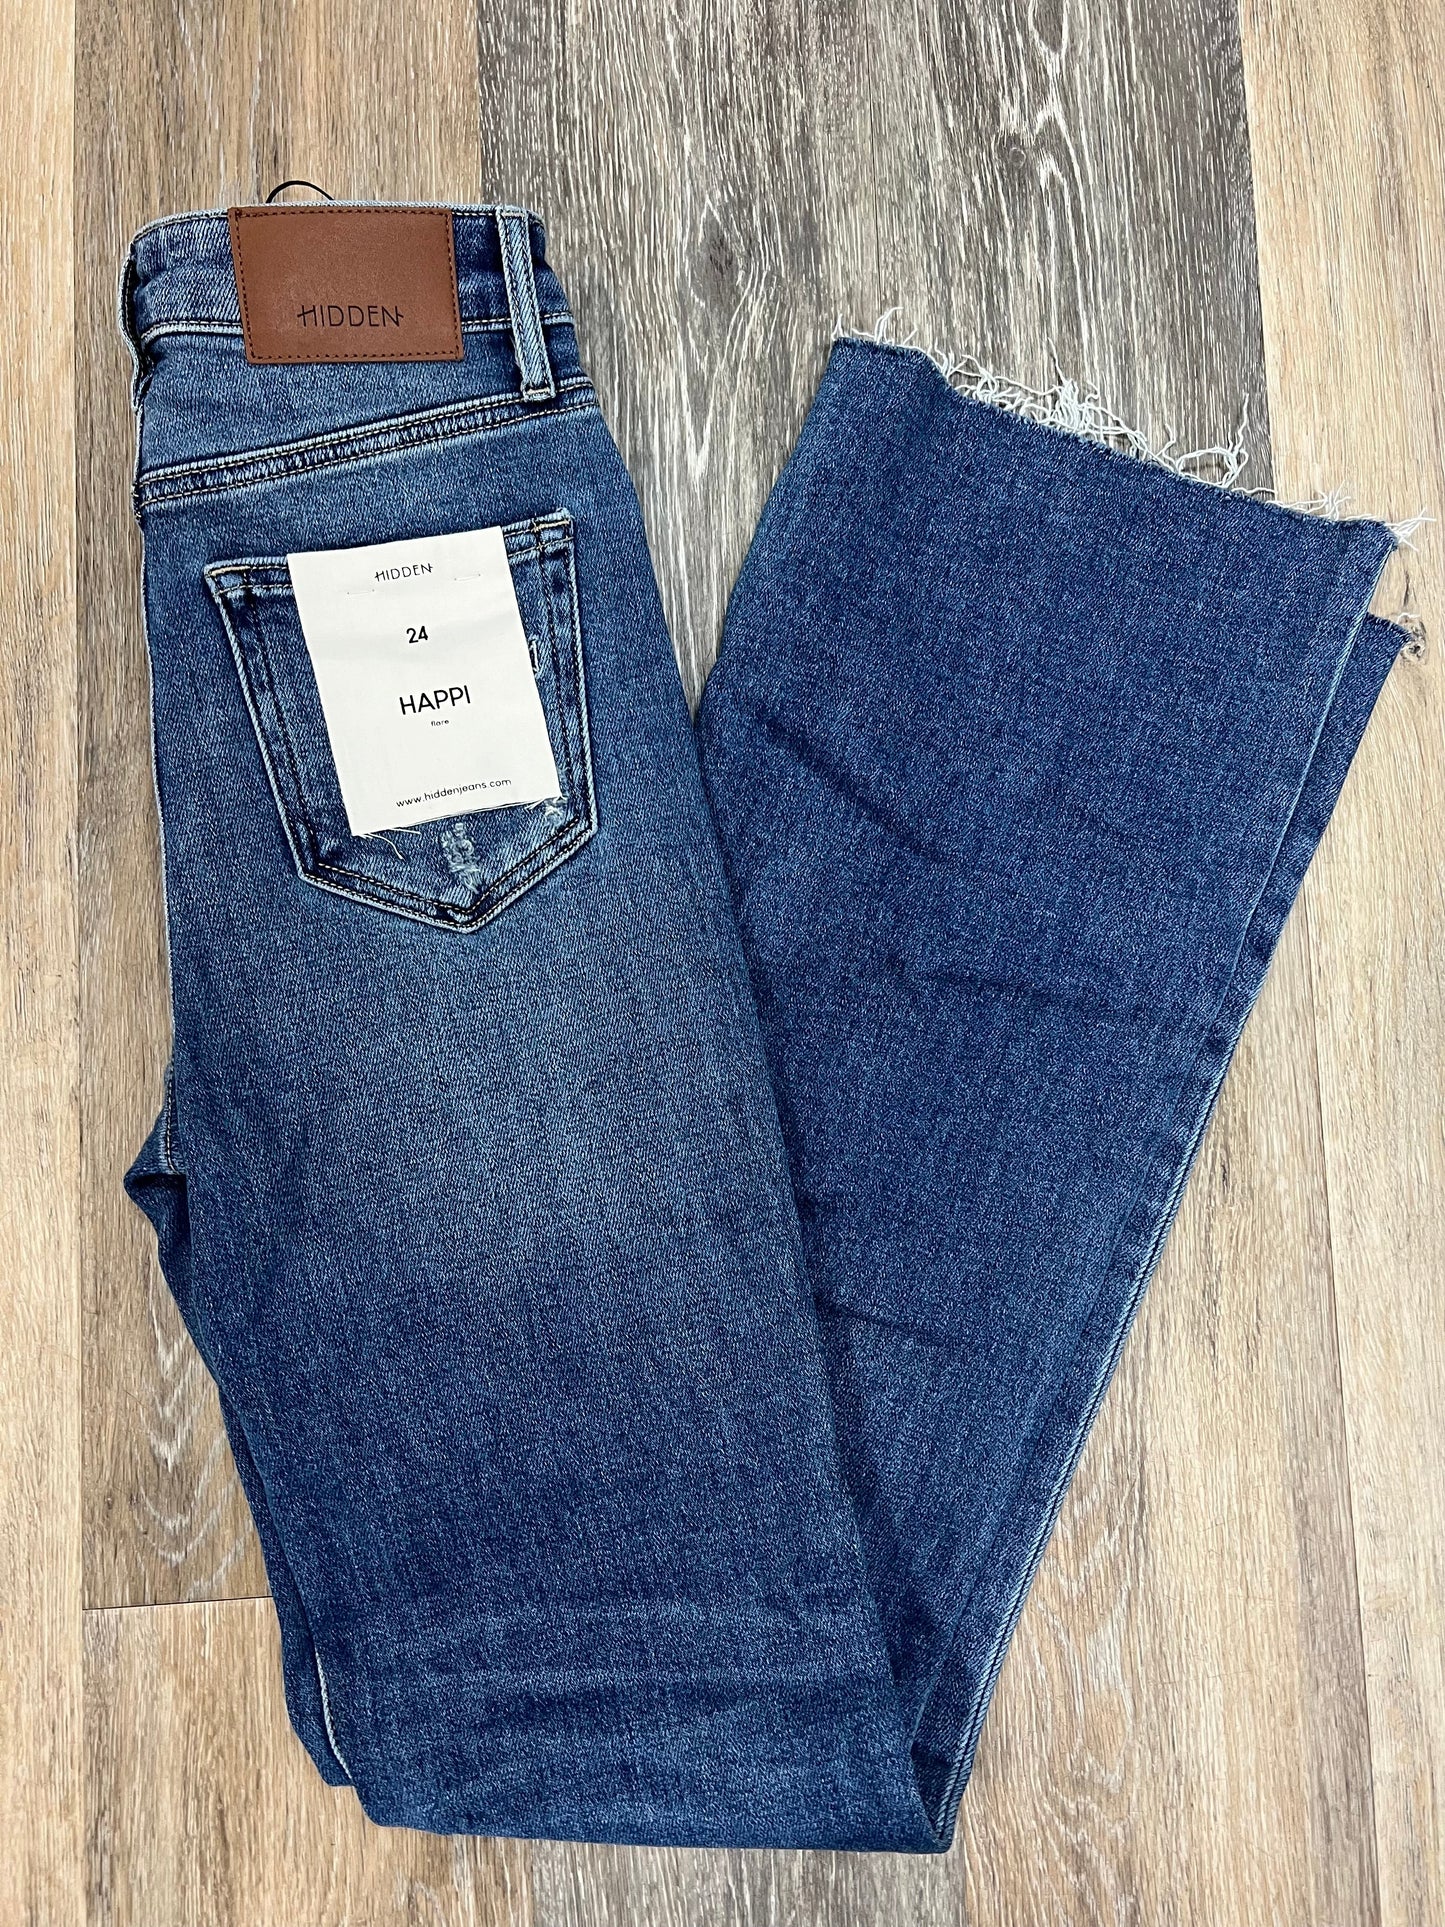 Blue Denim Jeans Flared Hidden, Size 0/24